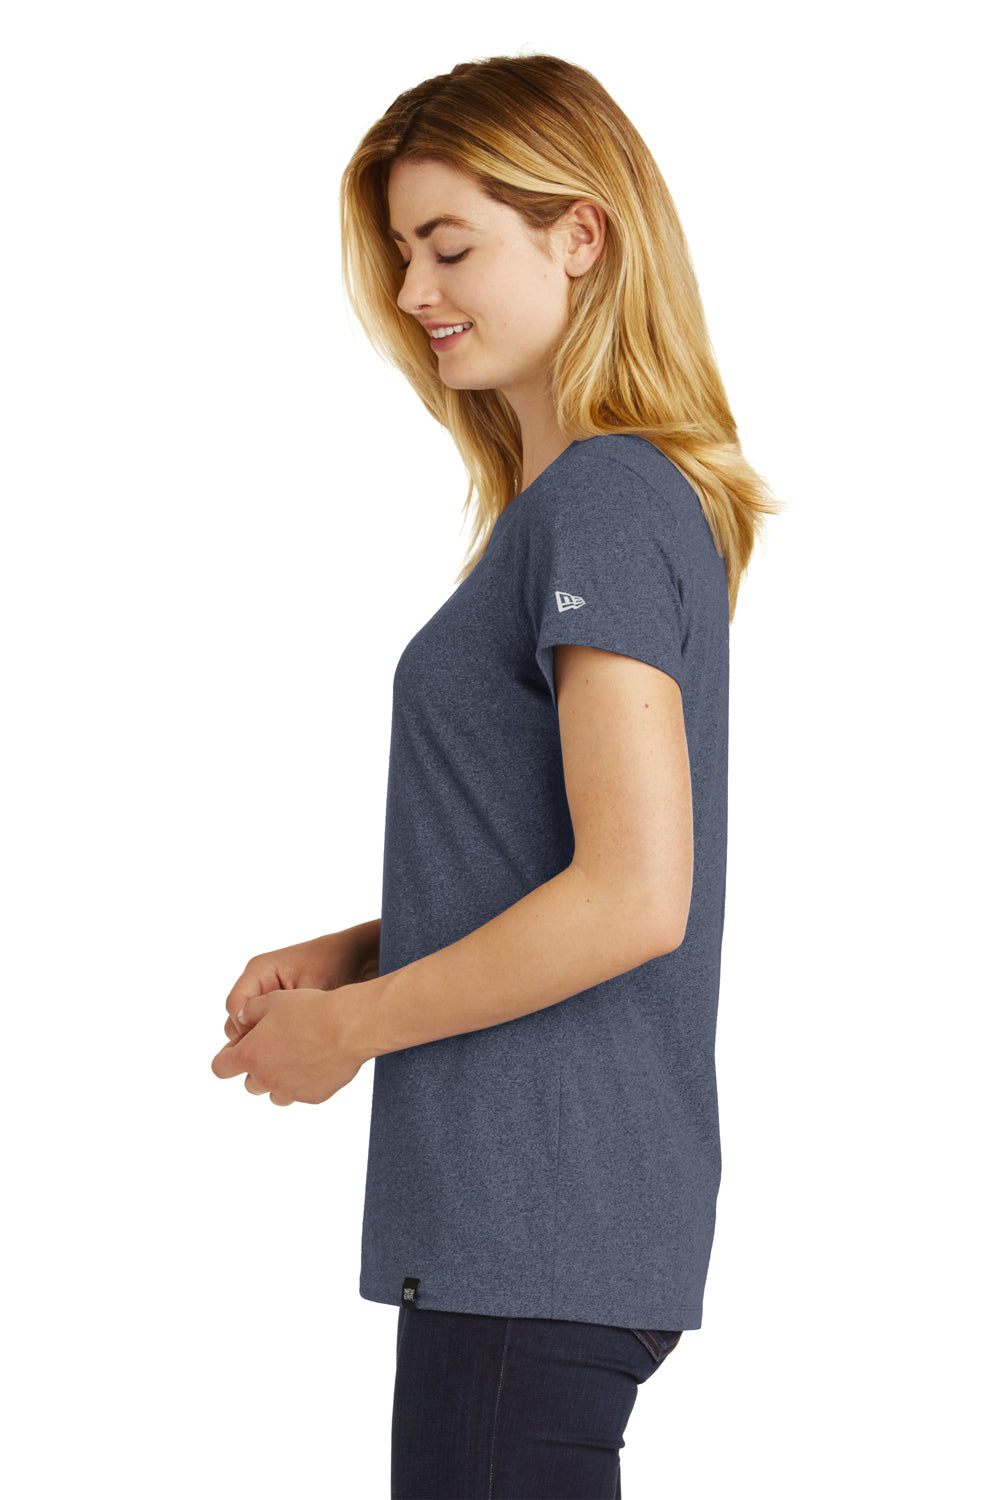 New Era LNEA100 Womens Heritage Short Sleeve Crewneck T-Shirt Heather Navy Blue Side